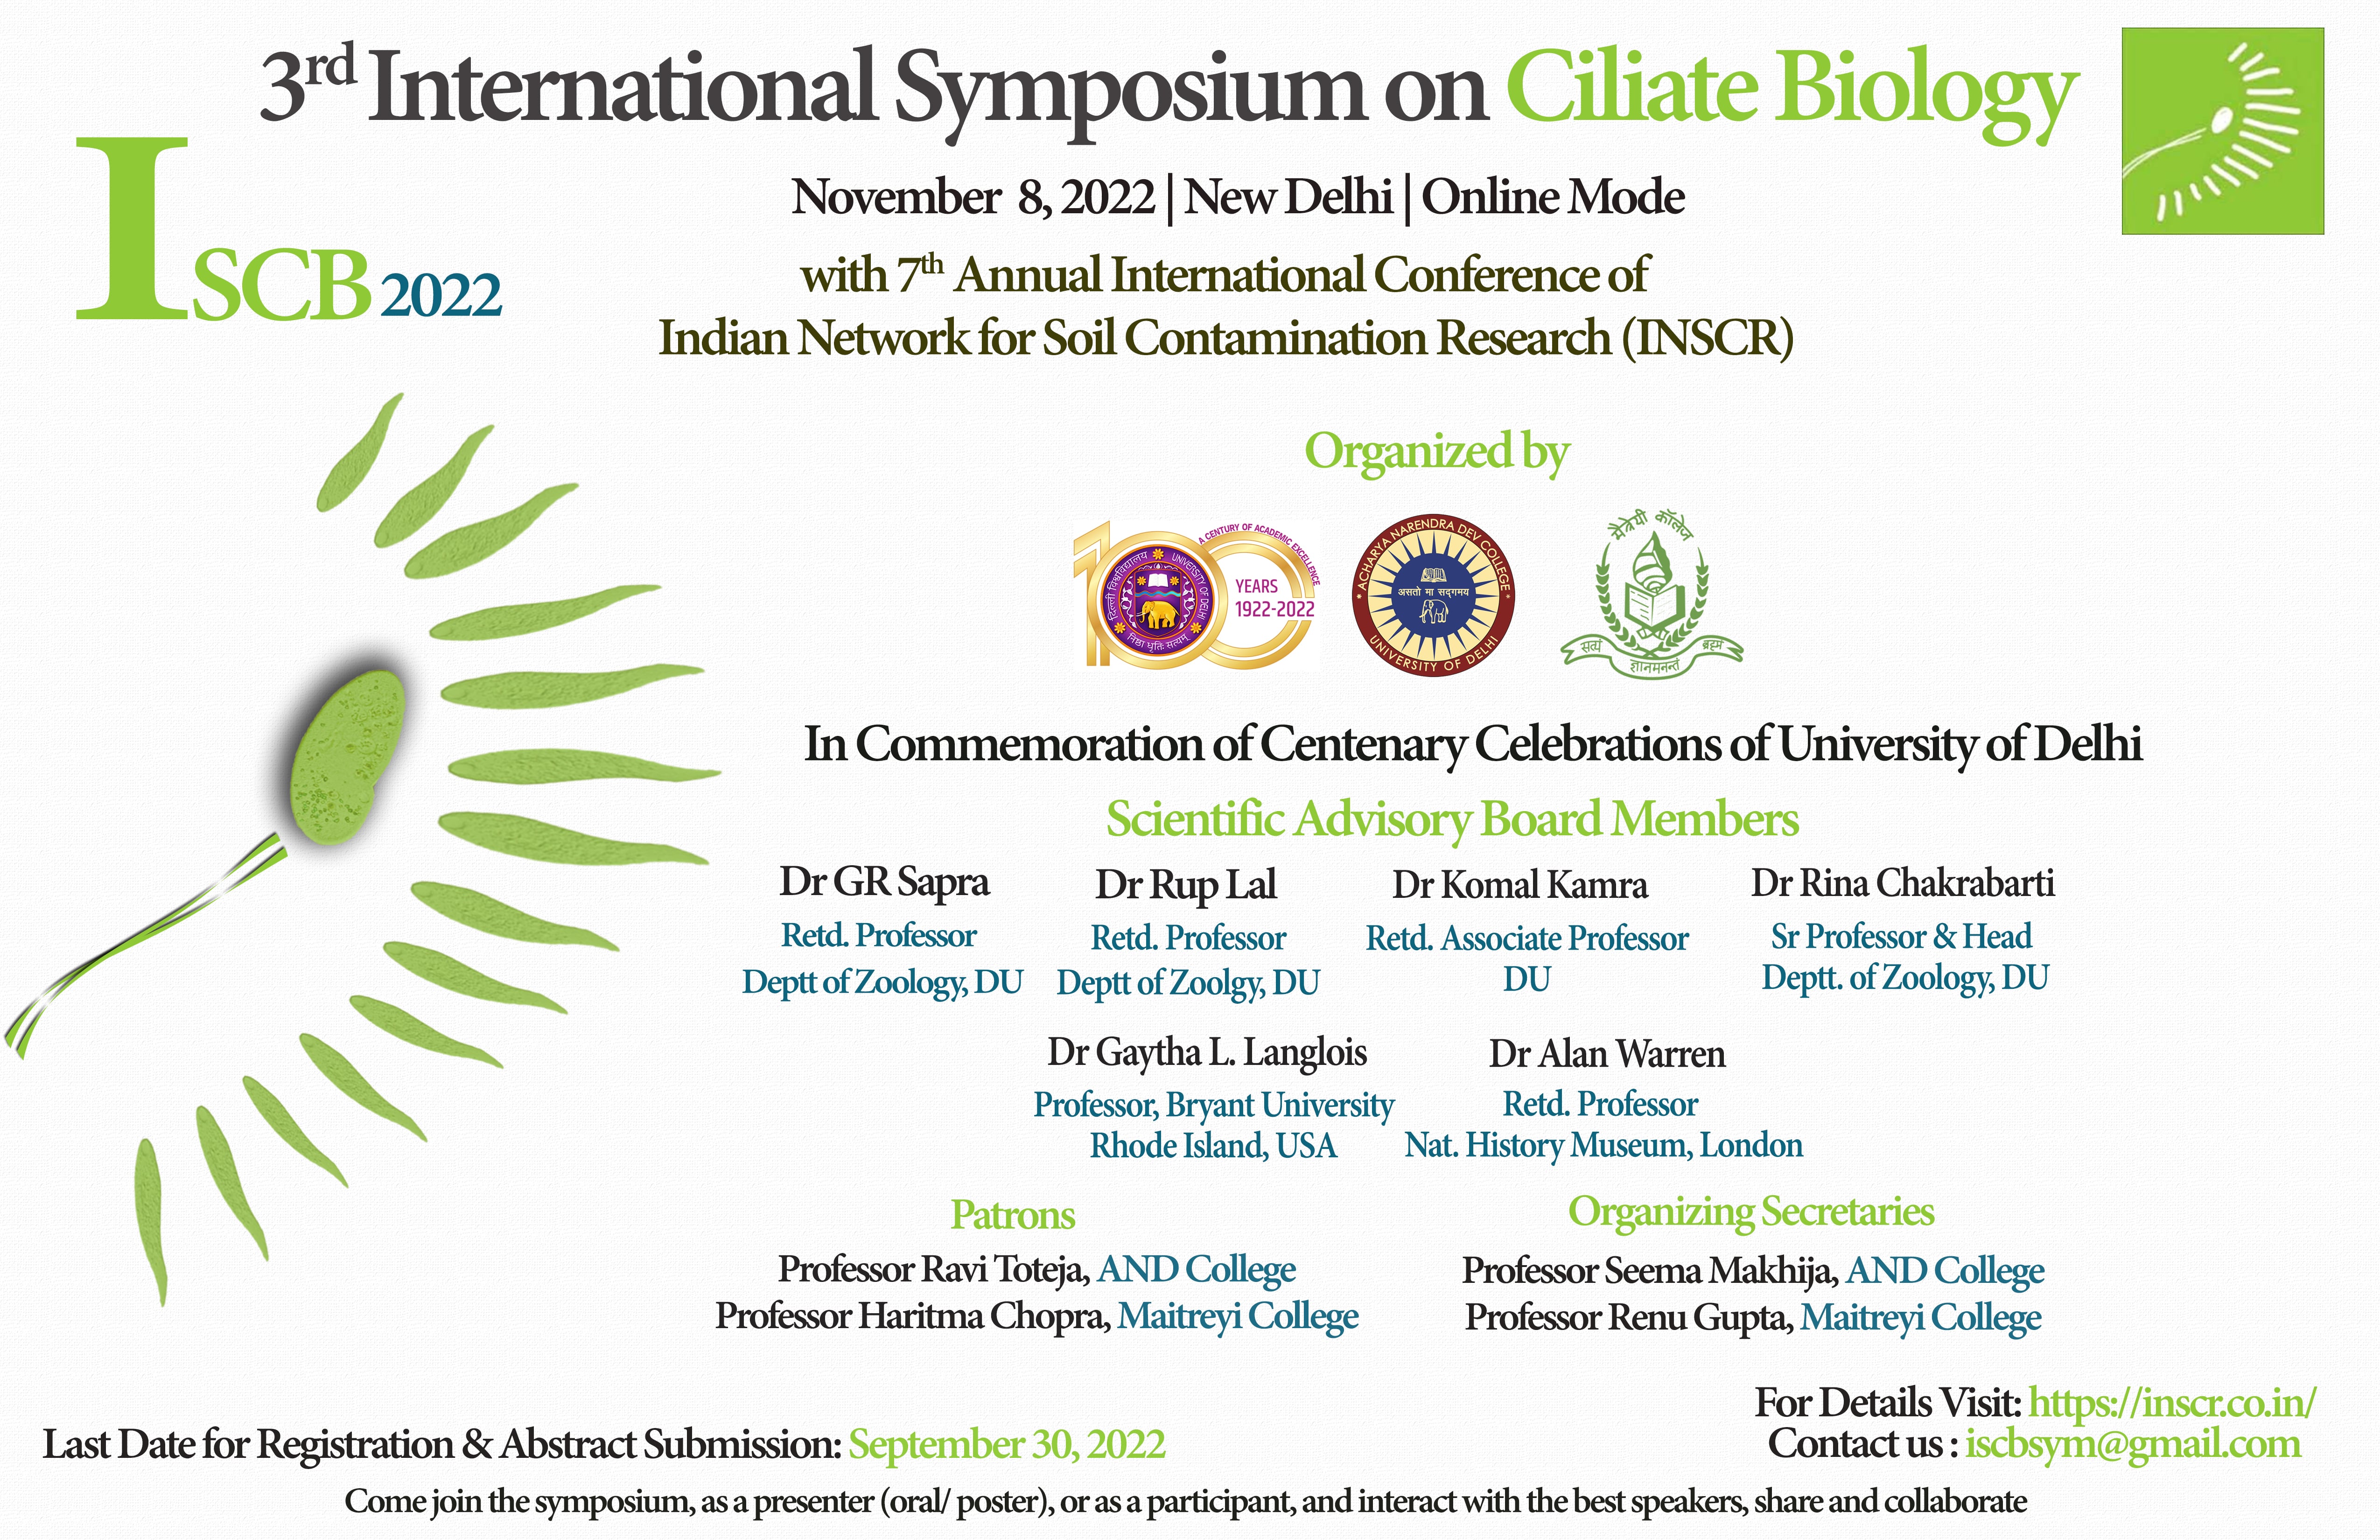 3rd International Symposium on Ciliate Biology